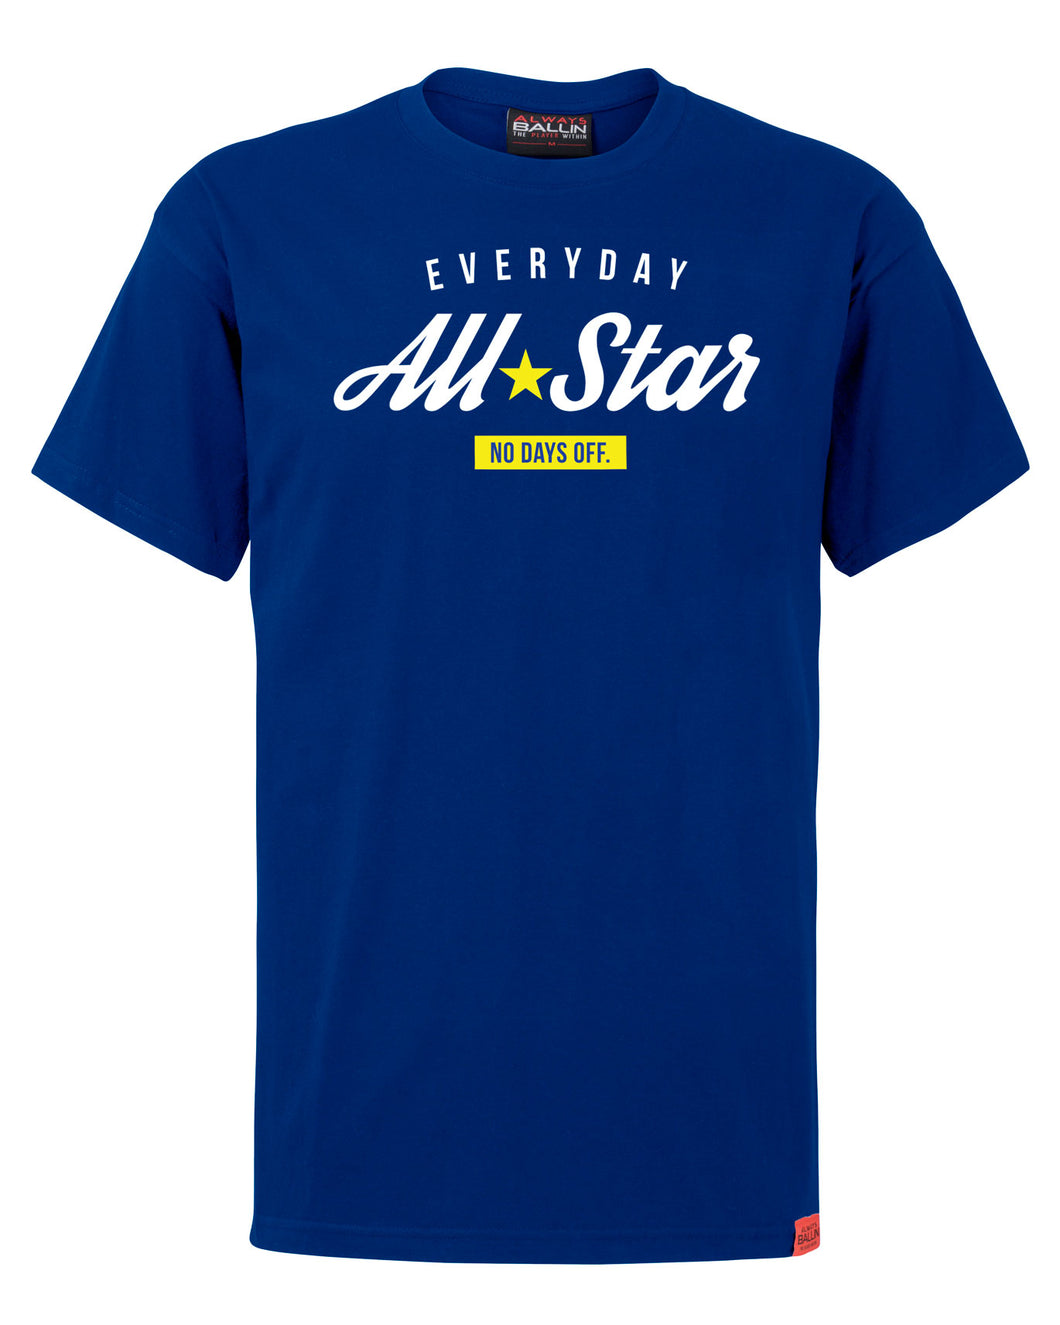 Everyday All-Star Mens Royal Blue T-Shirt